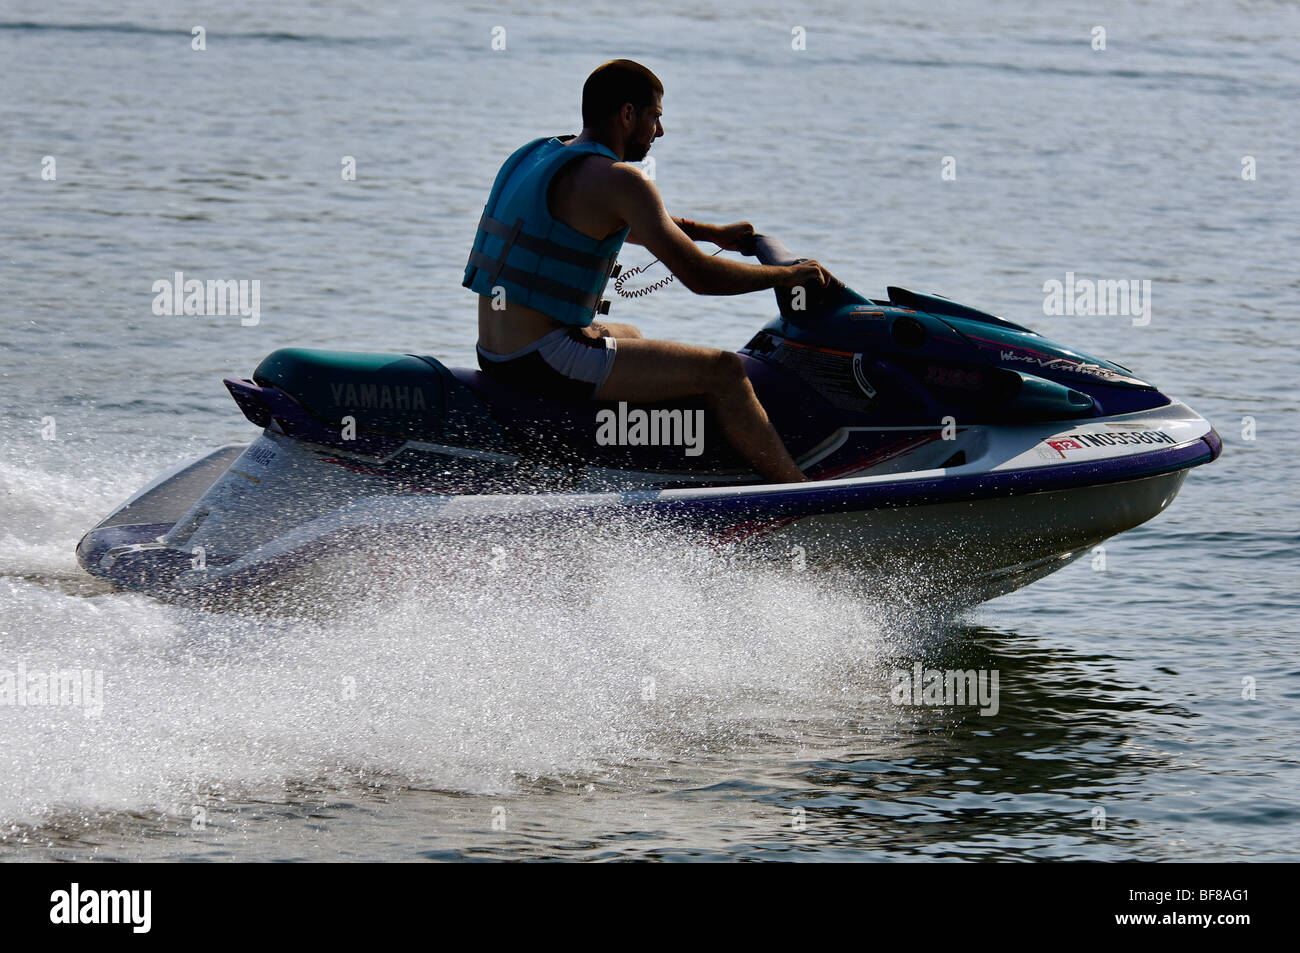 Montar moto acuática fotografías e imágenes de alta resolución - Alamy